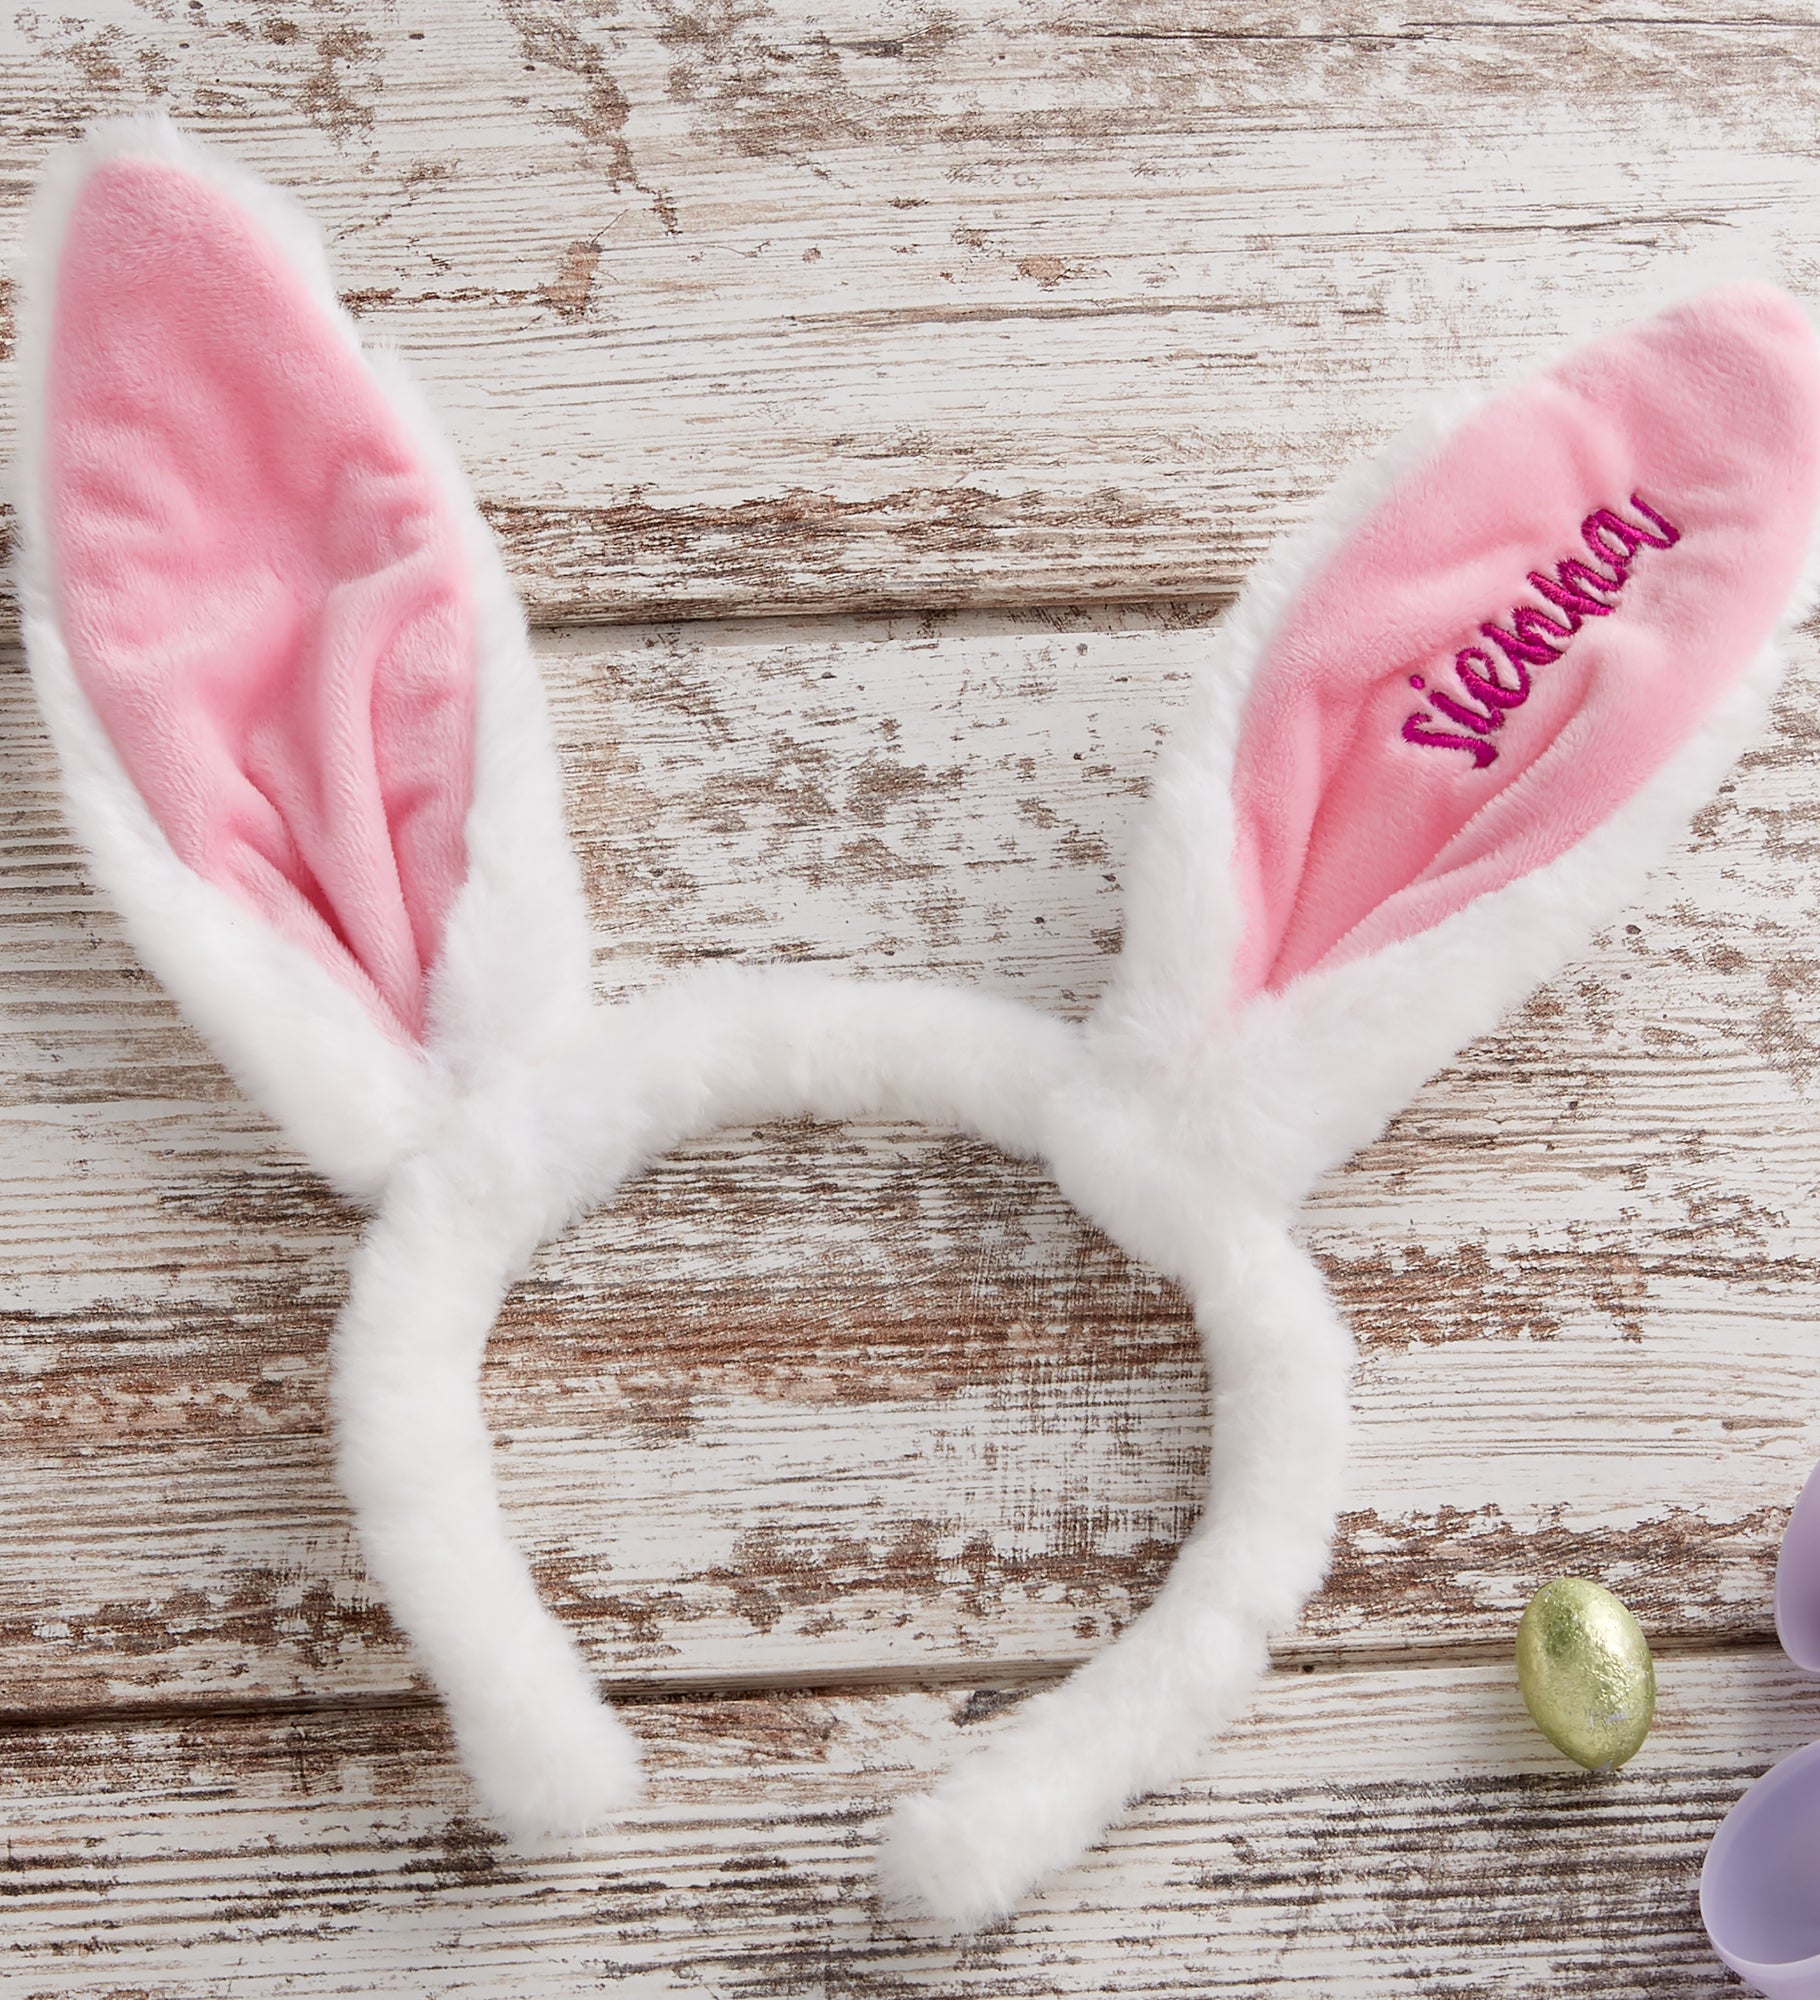 Embroidered Easter Bunny Ear Headband